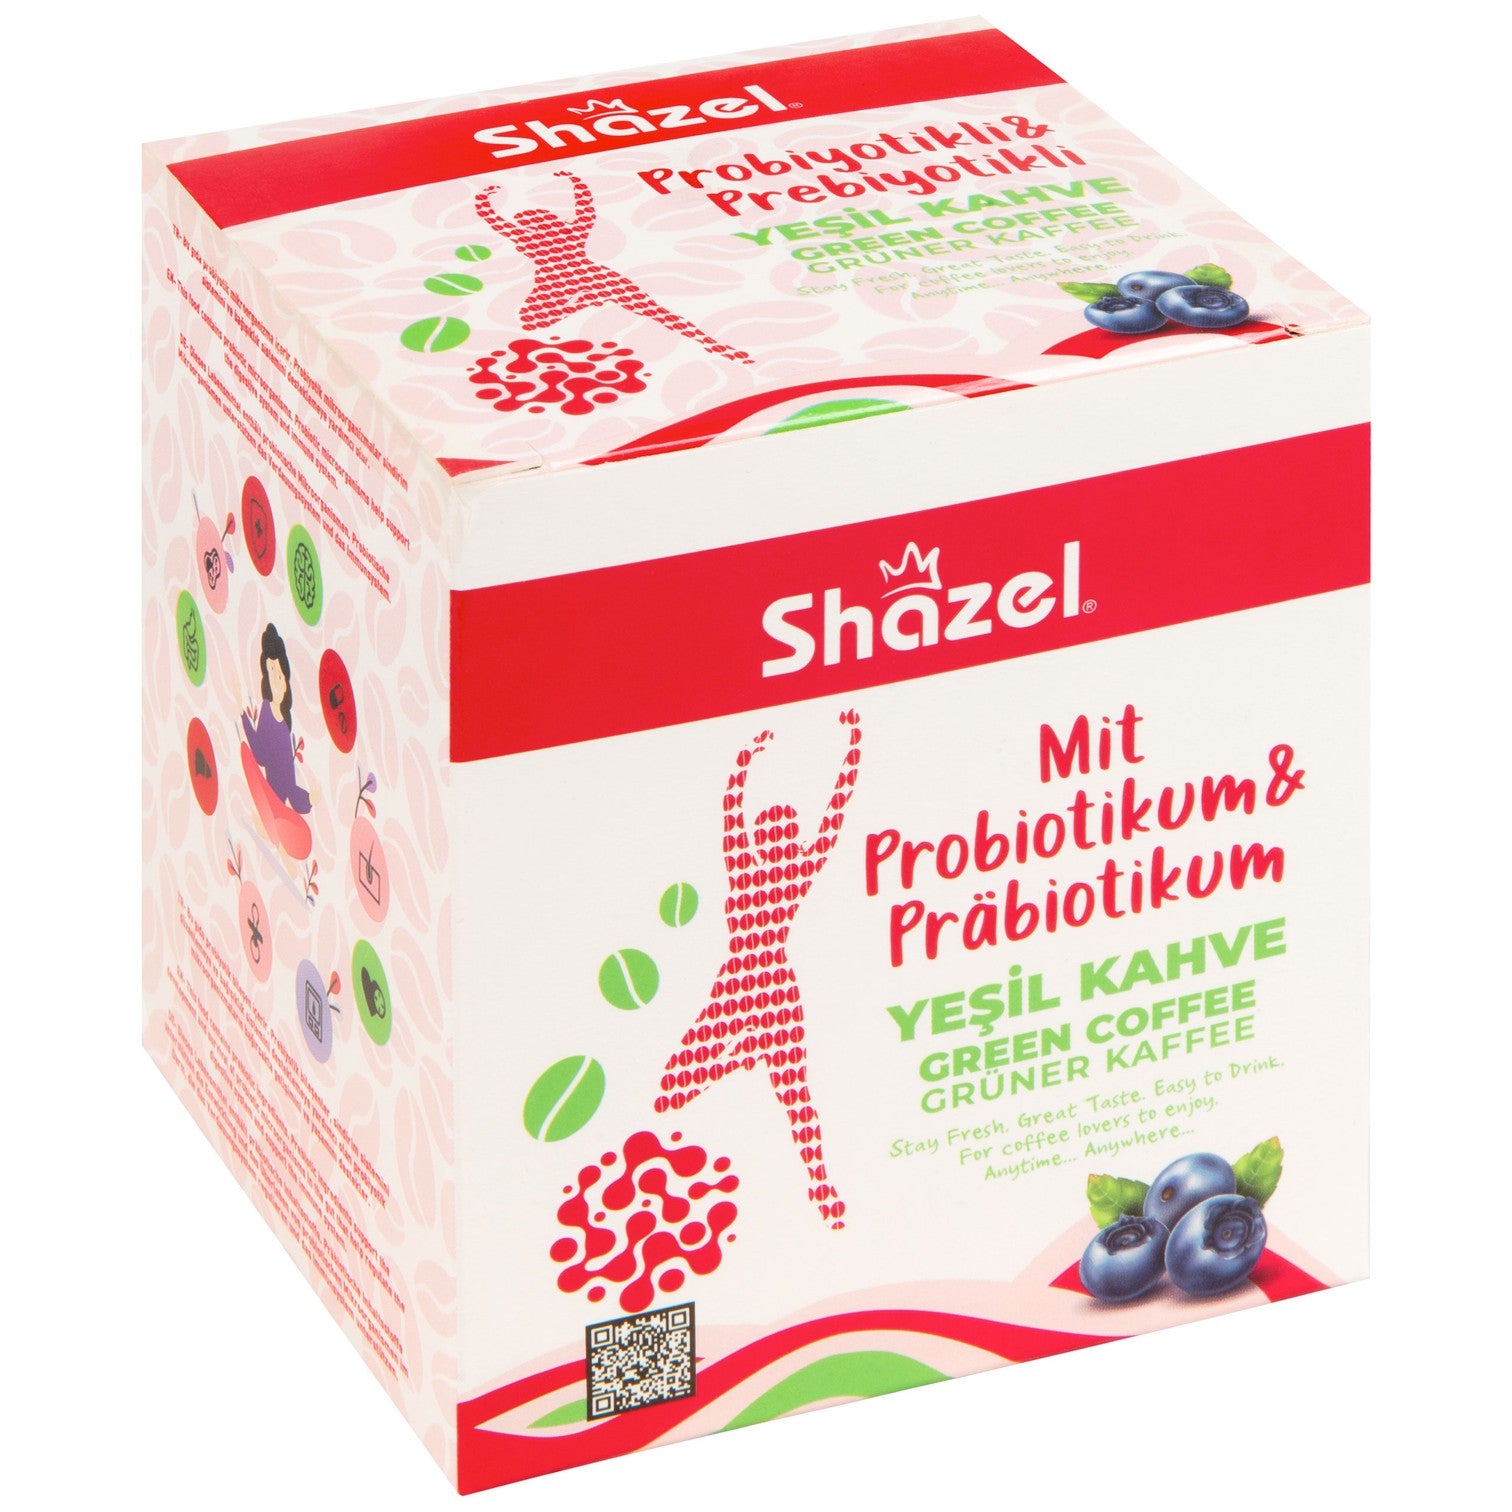 Shazel Probiotic& Prebiotic DETOX Green Coffee 4G x 14 Pieces